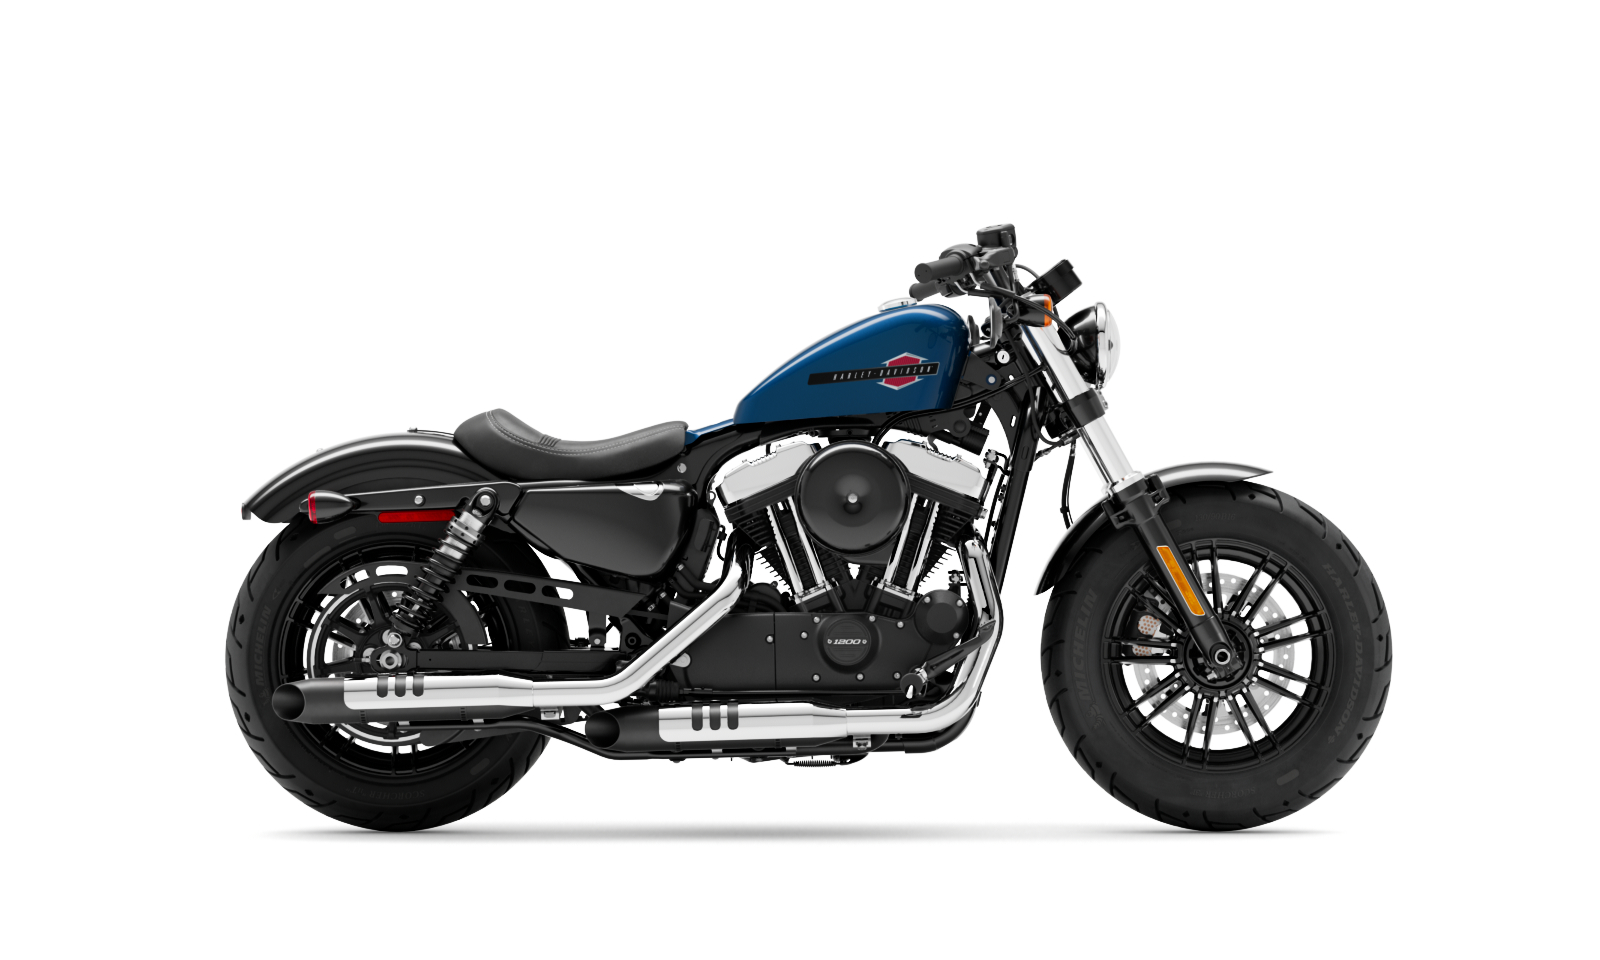 Motorrad Abdeckplane XL für Harley Sportster Forty-Eight 48/ Special sw-or 